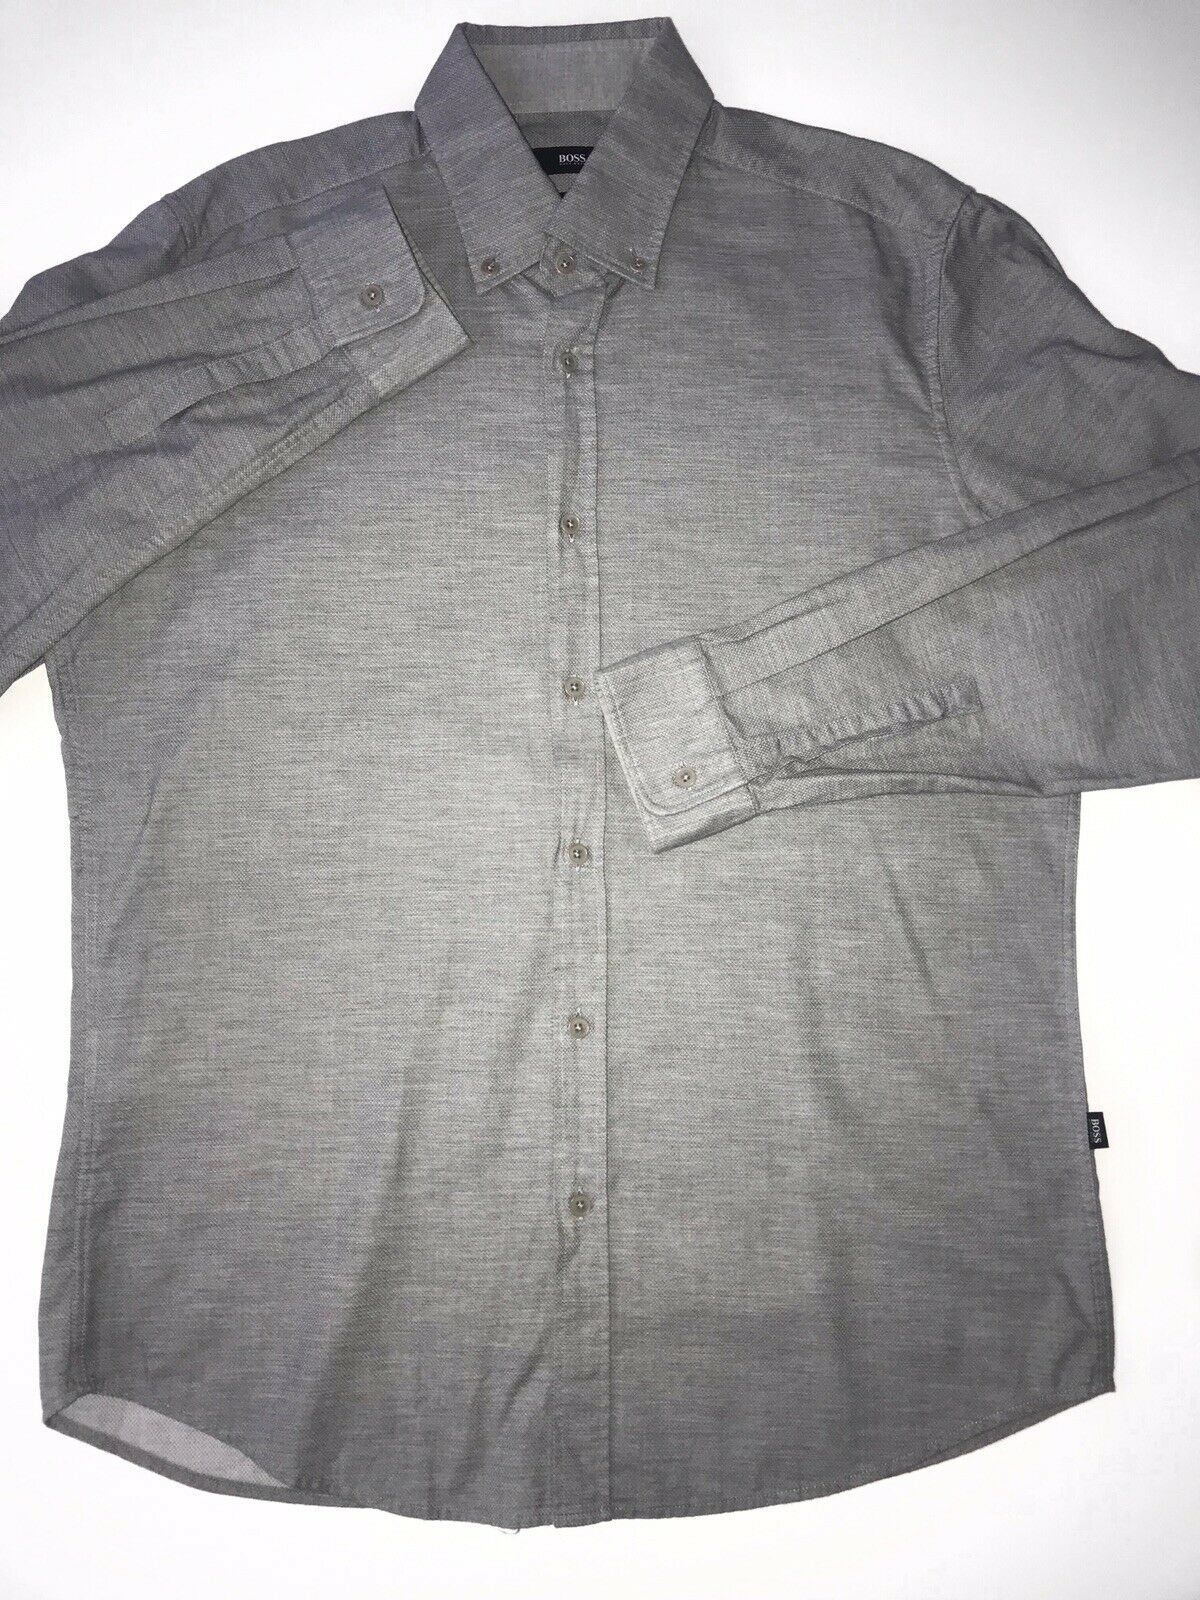 NWT $165 Hugo BossLeonard2 Mens Regular Fit Cotton Gray Dress Shirt Large